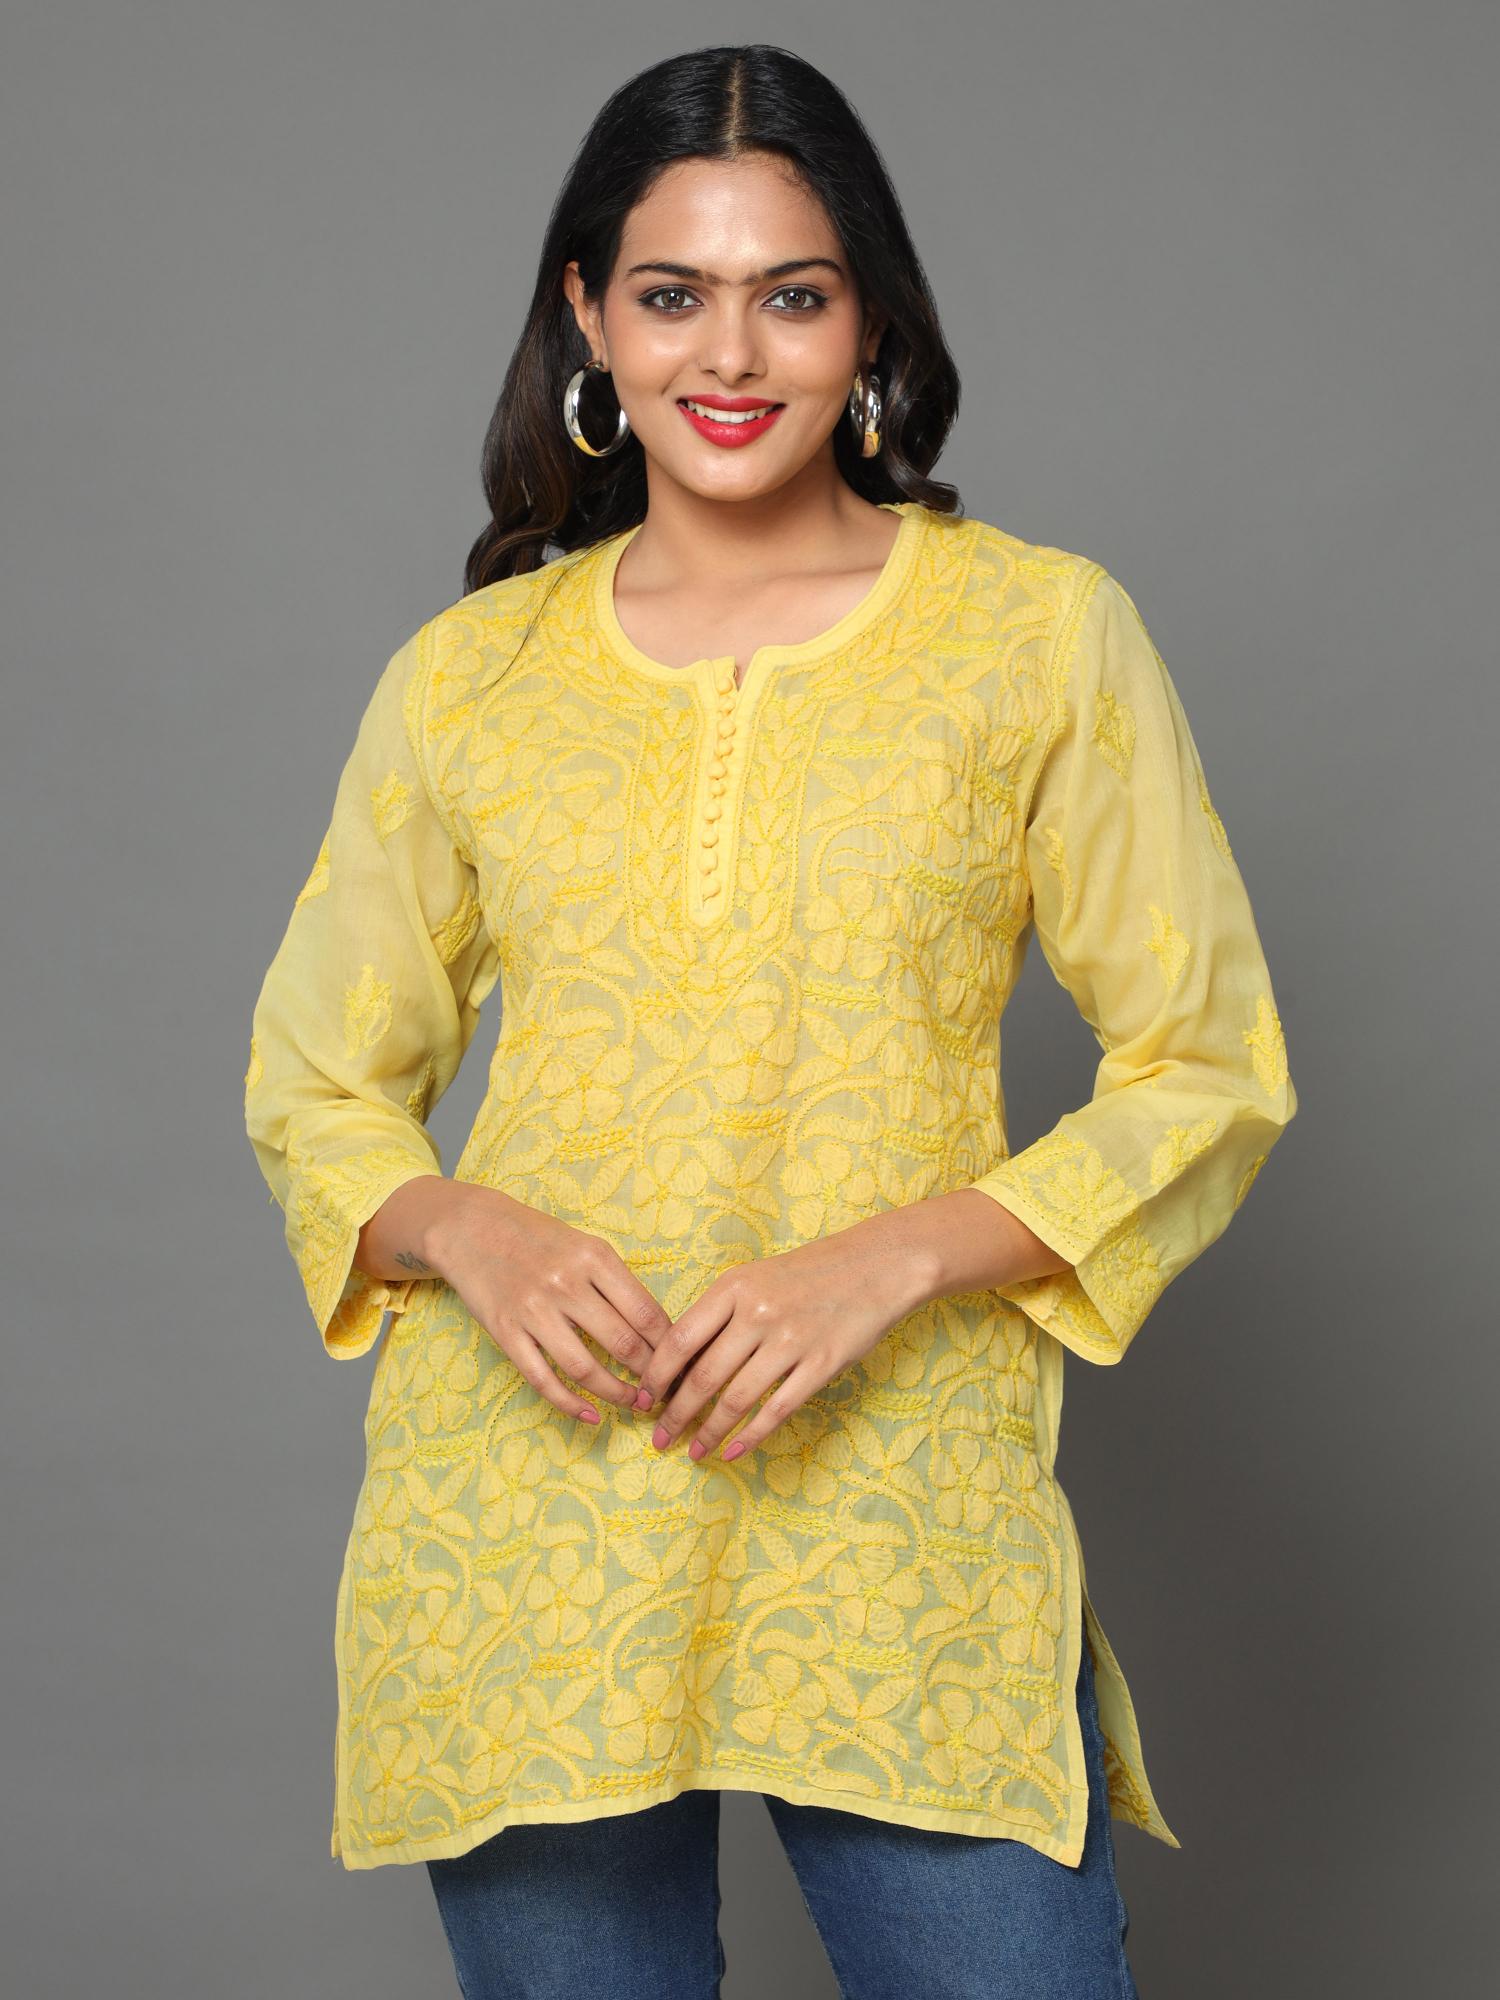 HerClozet Lucknow Chikankari Cotton Top-Yellow,Size 36